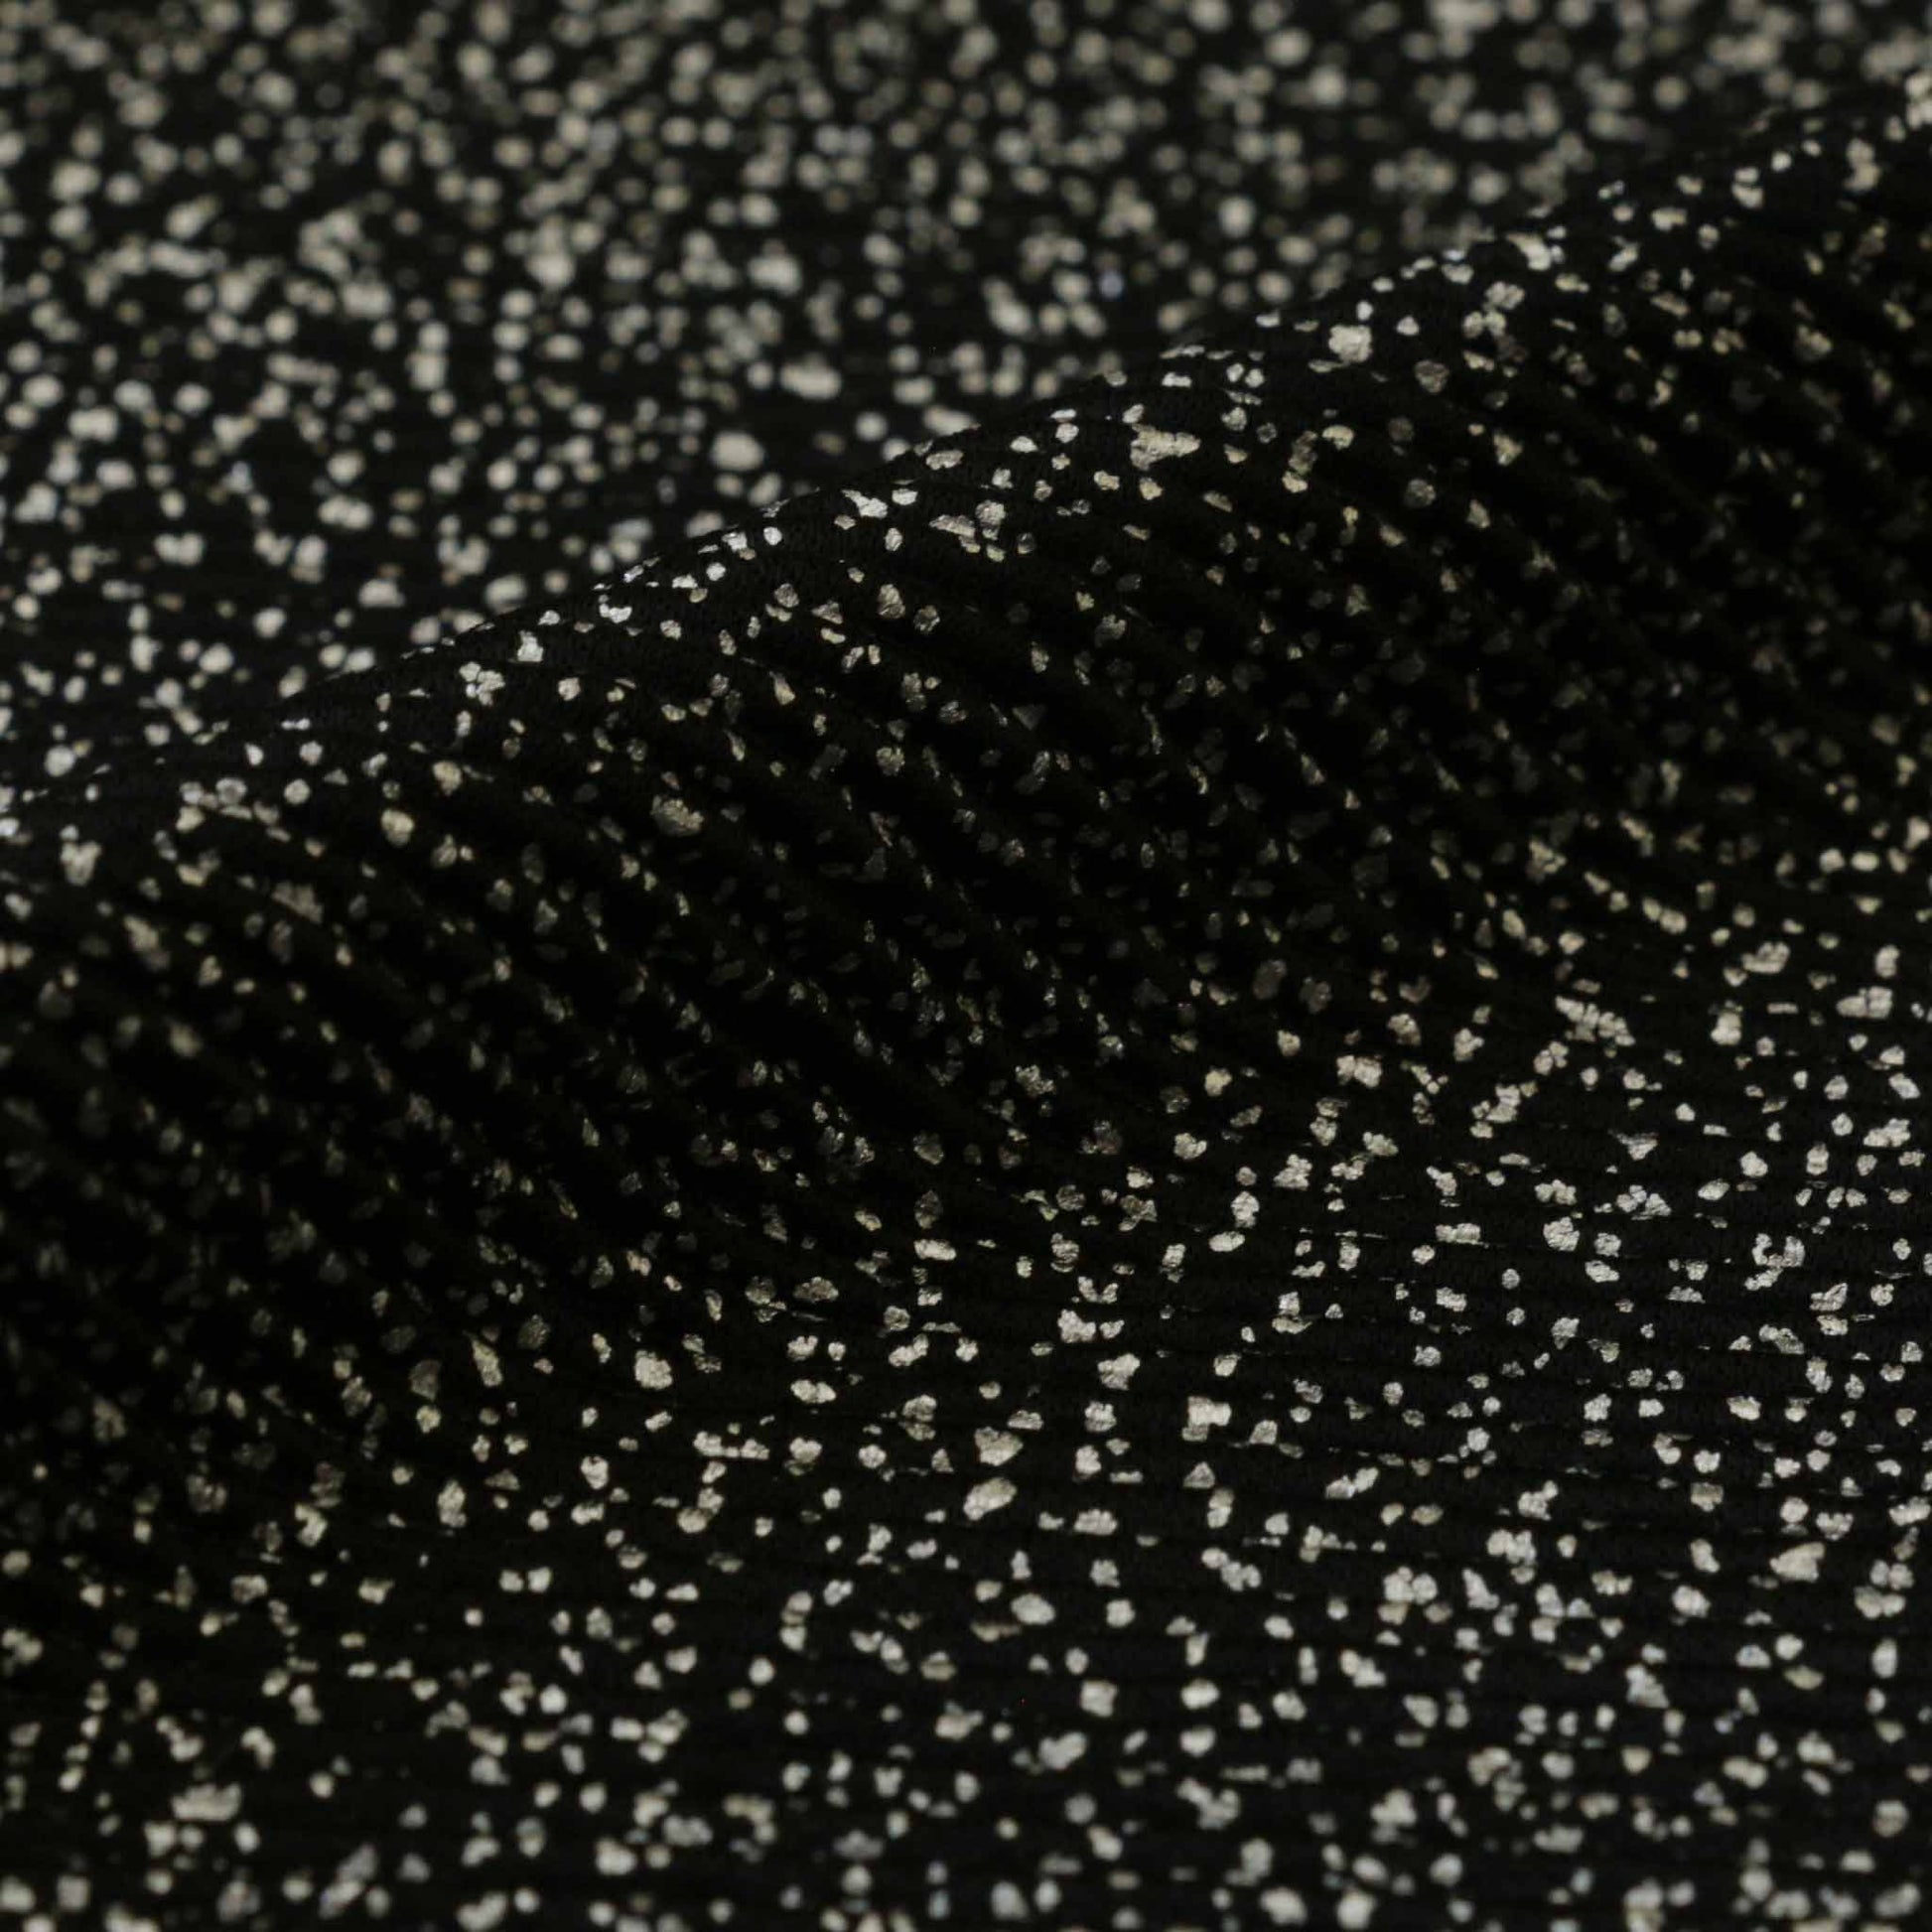 black plisse dressmaking fabric with shimmer silver speckled dot pattern